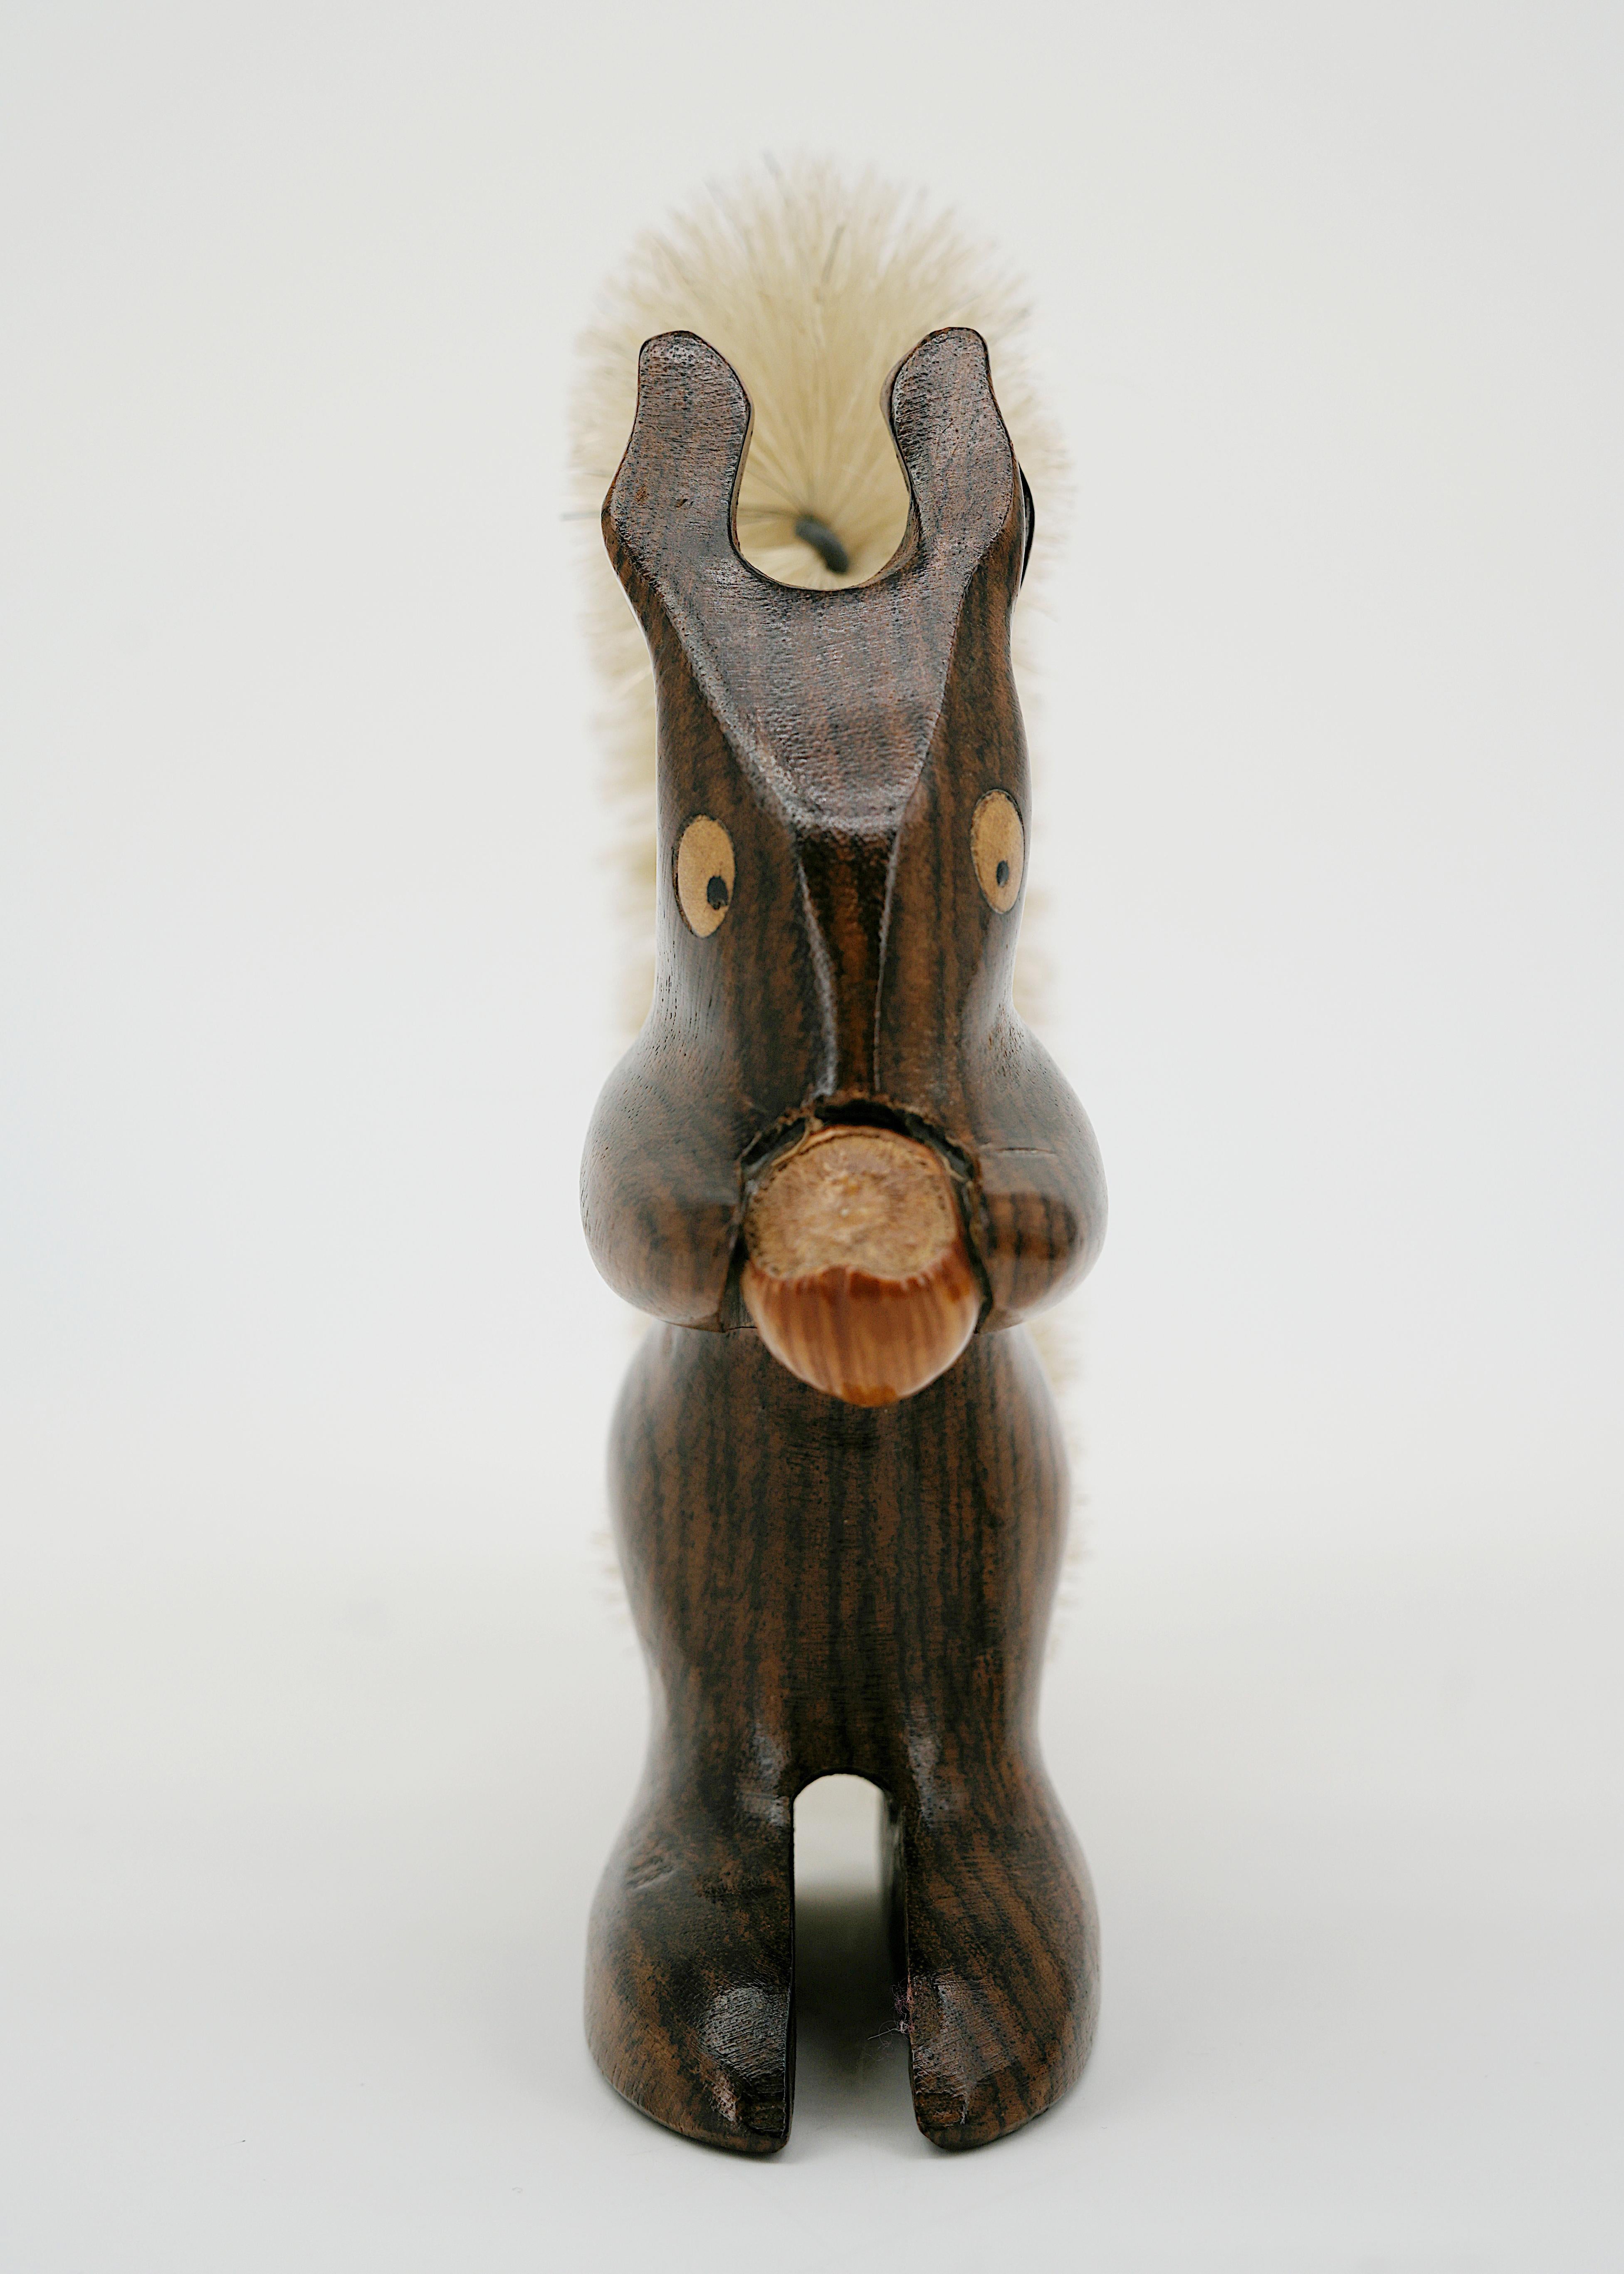 Max Meder, Hand Carved Wooden Squirrel Brush & Pan, France, 1950s For Sale 3